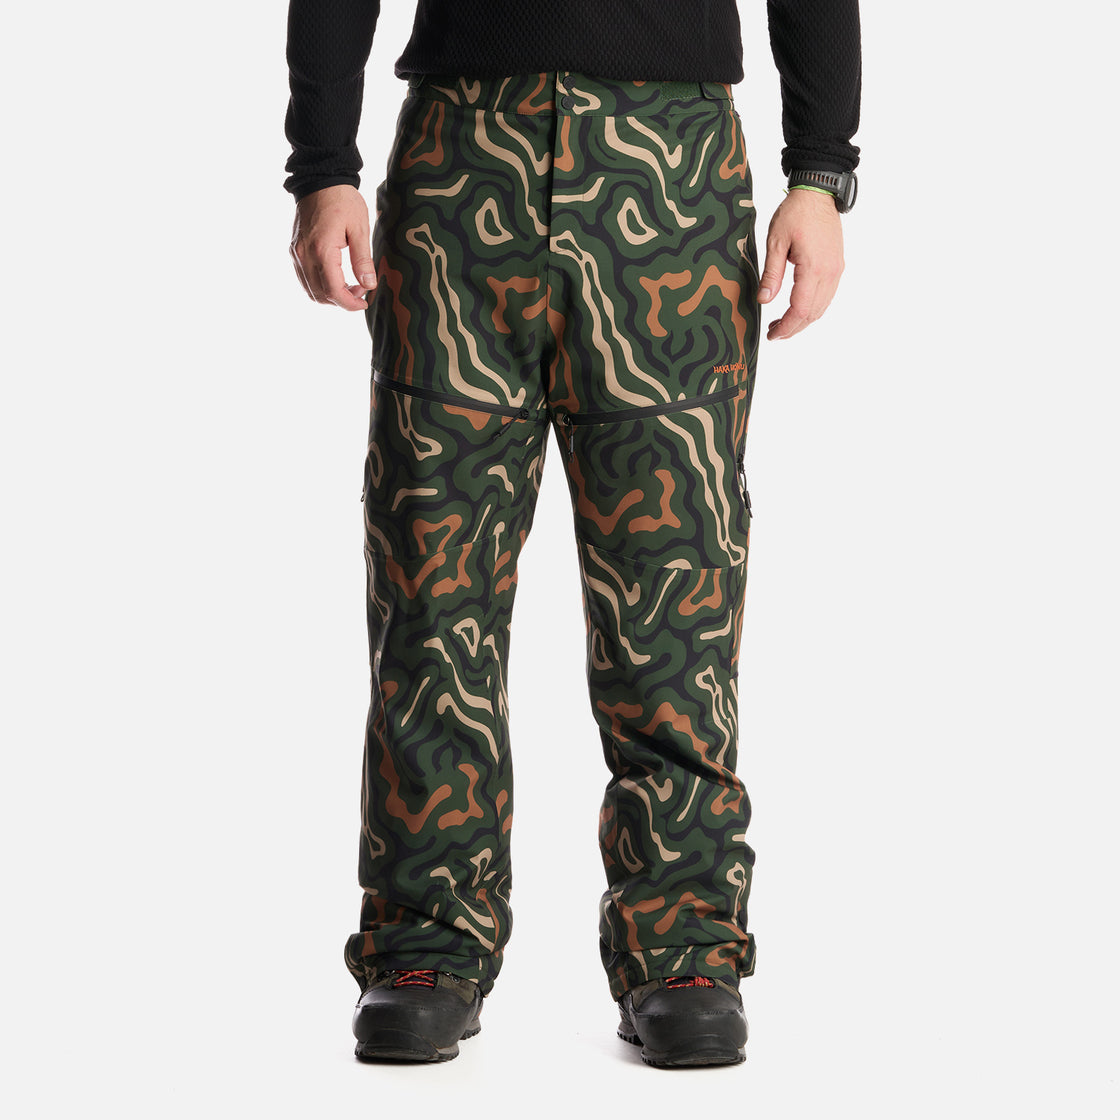 Pantalon Hombre Kunk Print Verde Militar Haka Honu